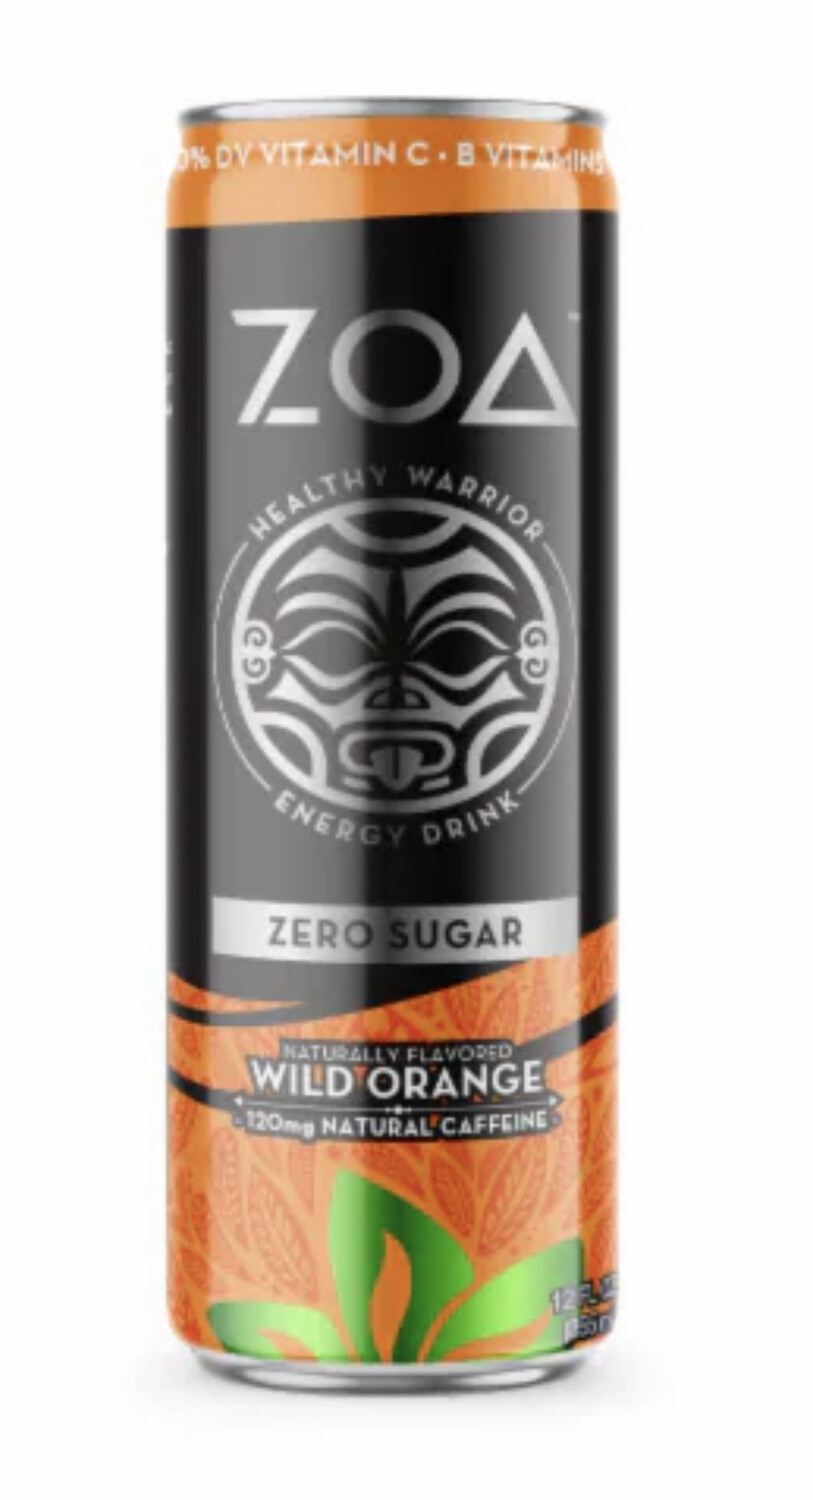 Zoa Zero Sugar Healthy Warrior Energy Drink Wild Orange 